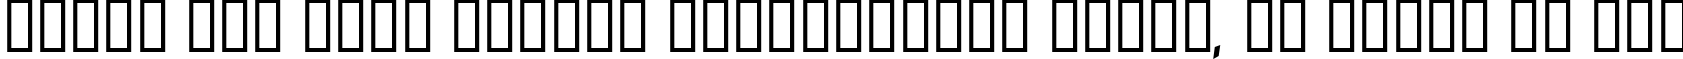 Пример написания шрифтом Hammerhead Italic текста на русском